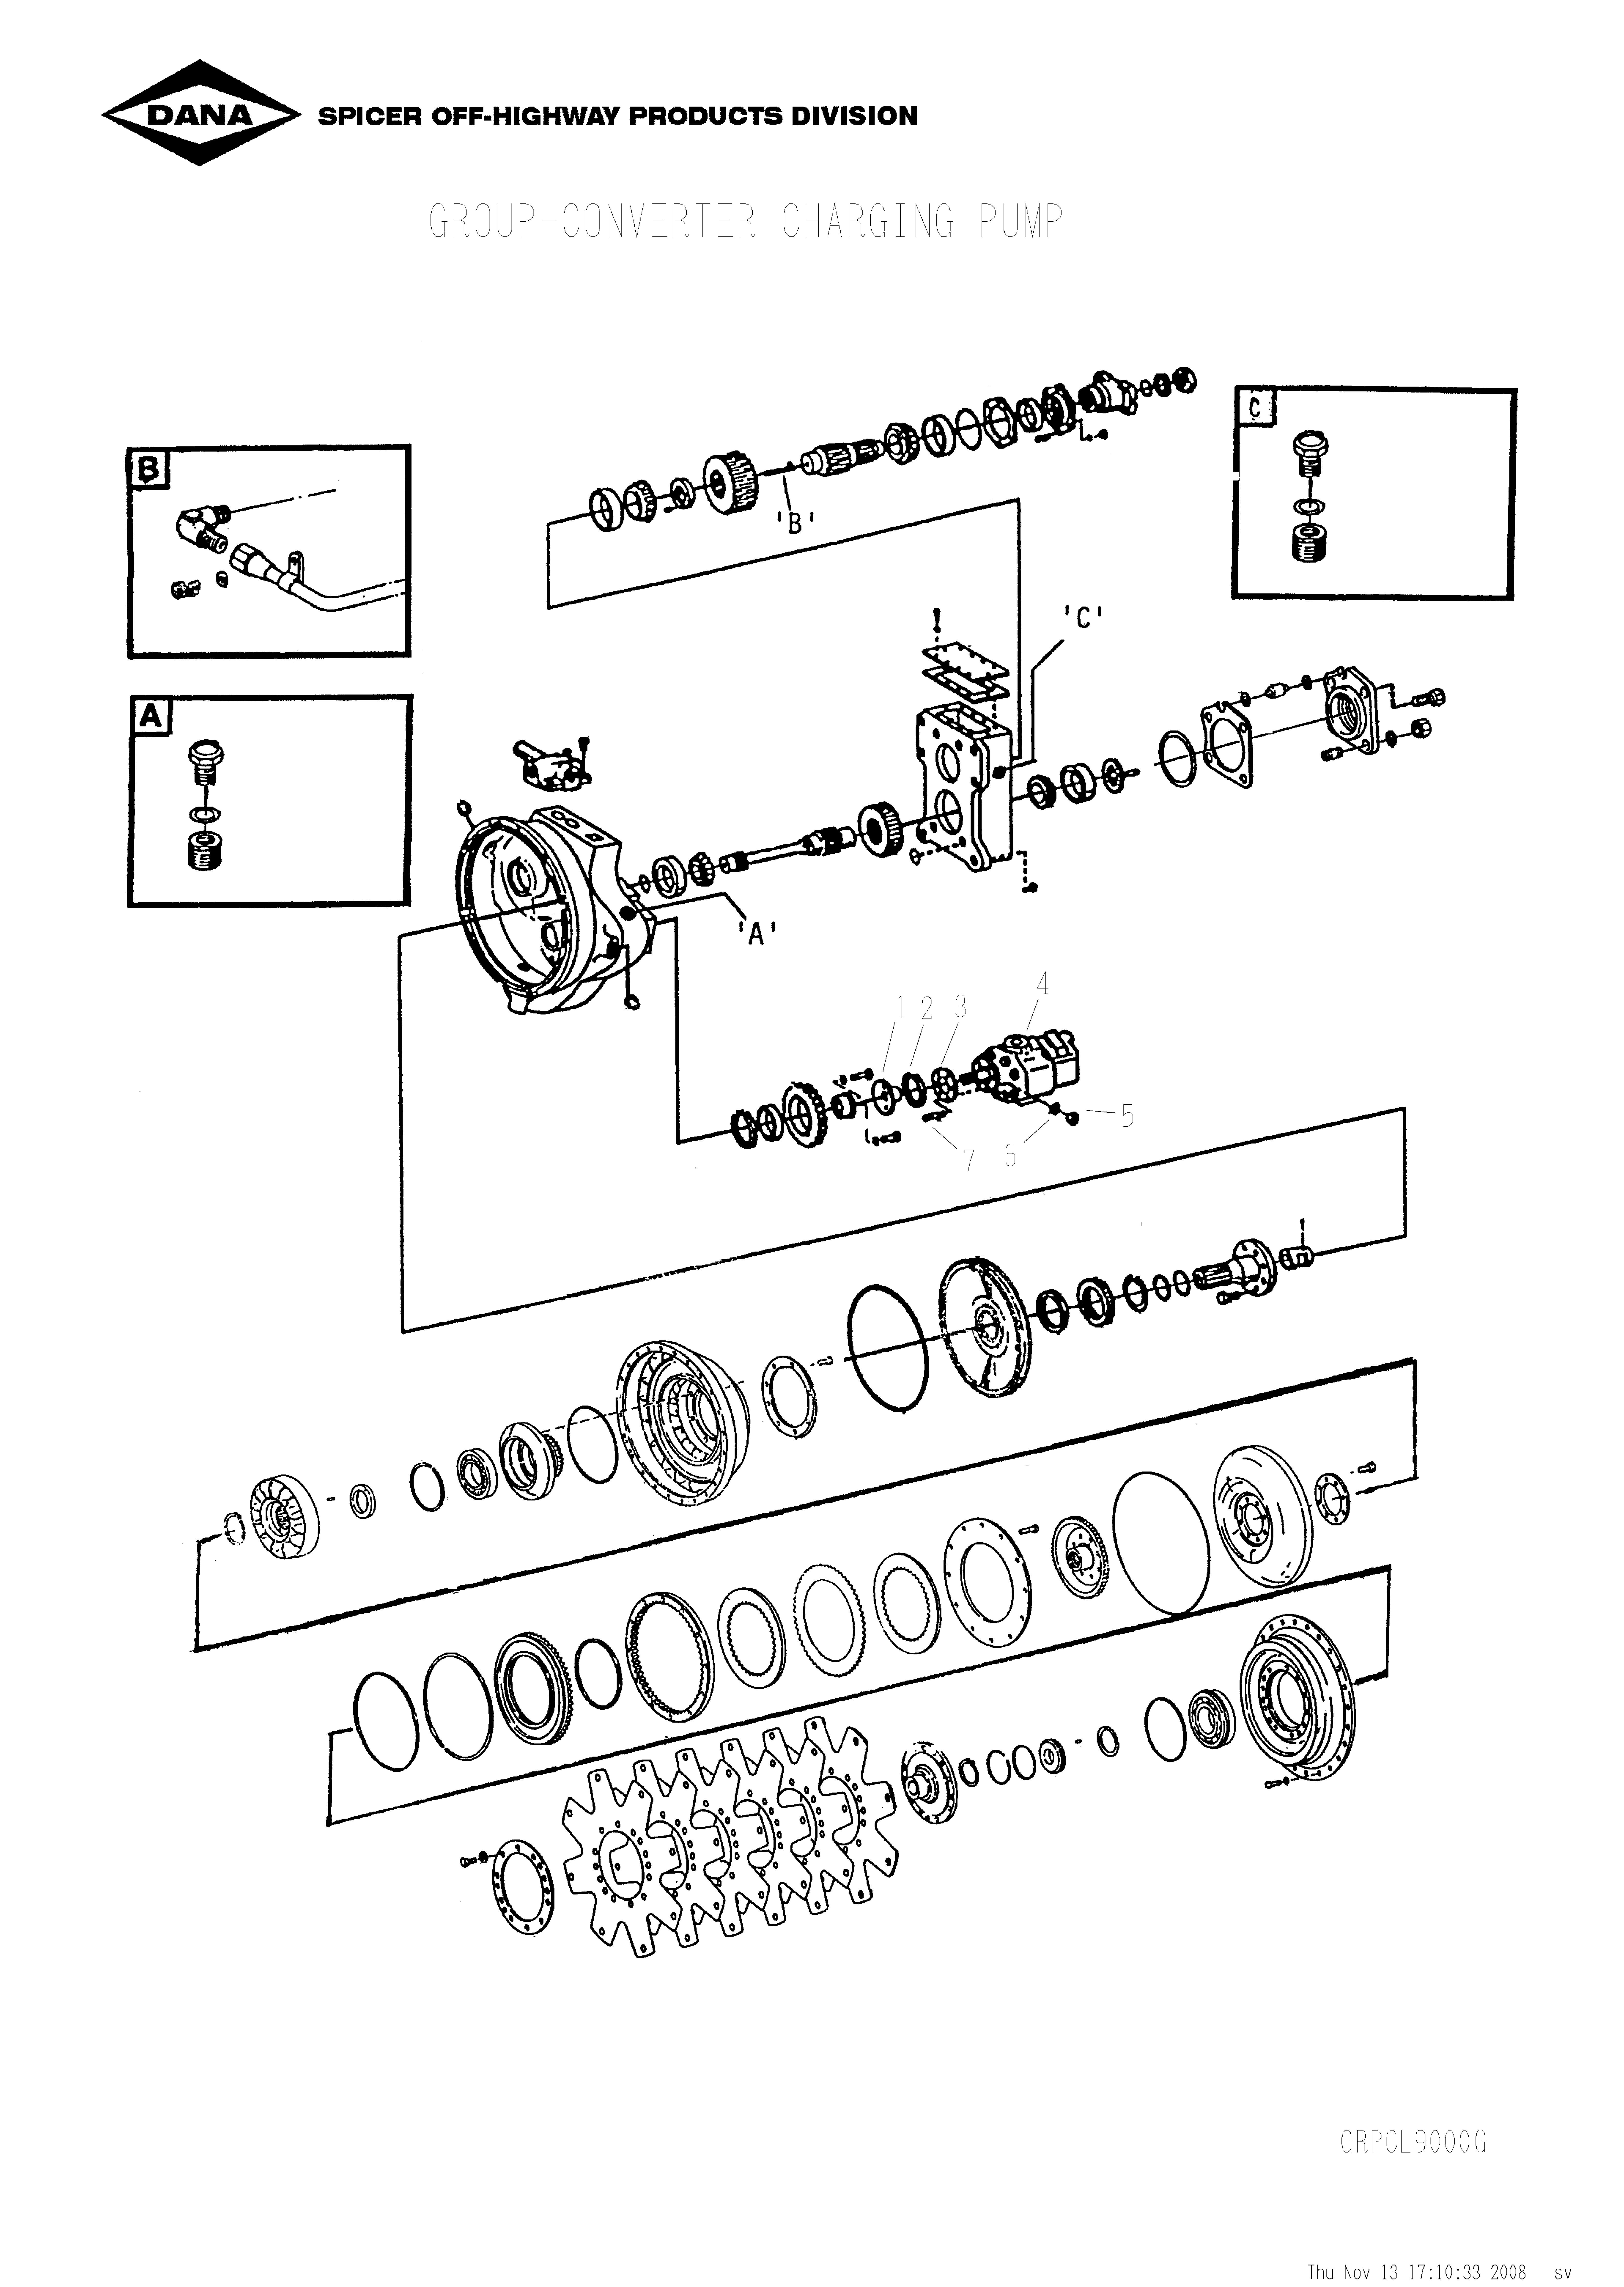 drawing for PLASSER 157-660 - PUMP (figure 2)